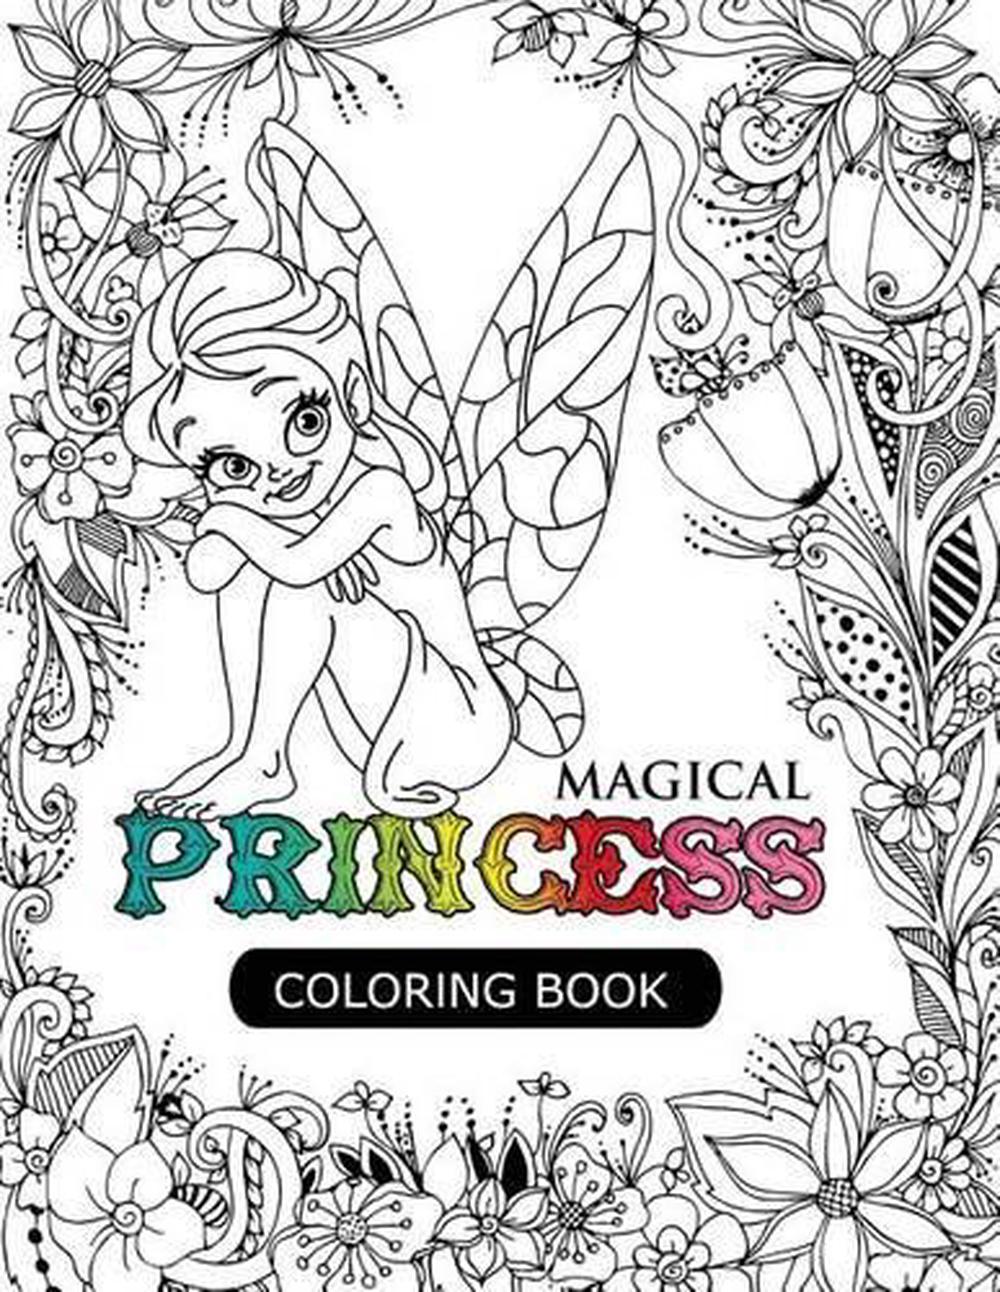 Download Magical Princess An Princess Coloring Book With Princess Forest Animals Fantas 9781541213210 Ebay